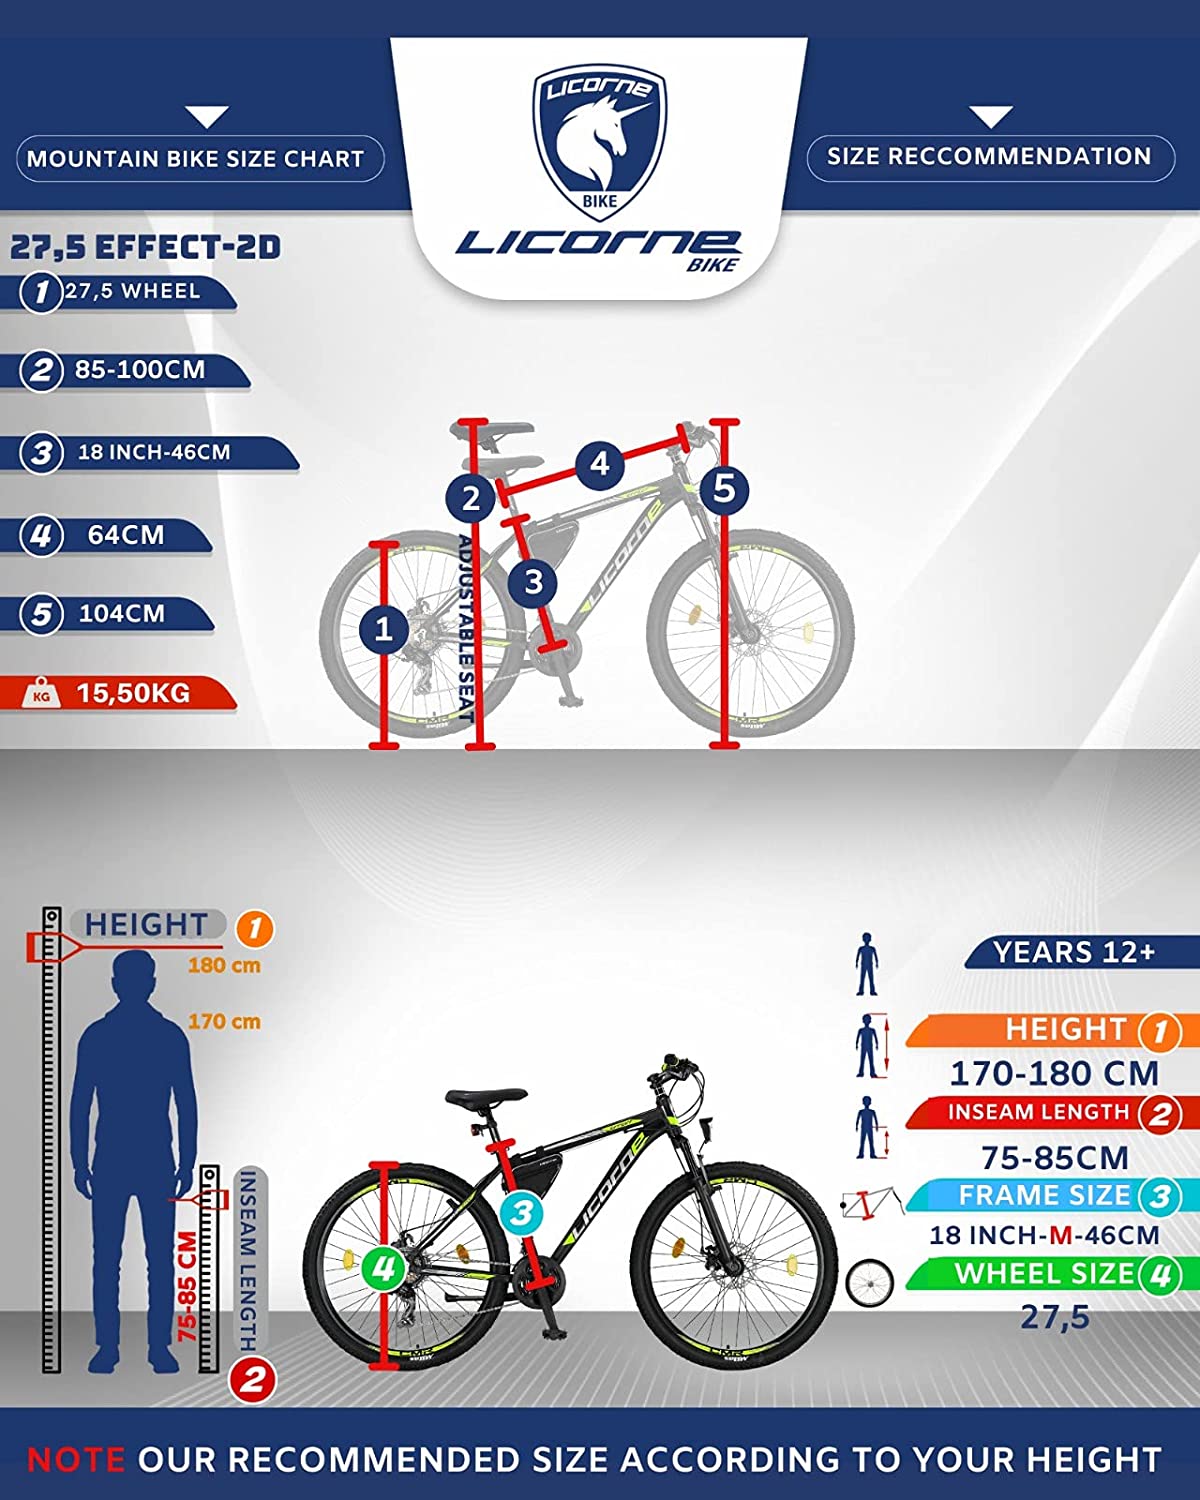 Licorne Bike Effect Premium Mountain Bike - Bicycle for Boys, Girls, Men and Women - Shimano 21 Speed Gear